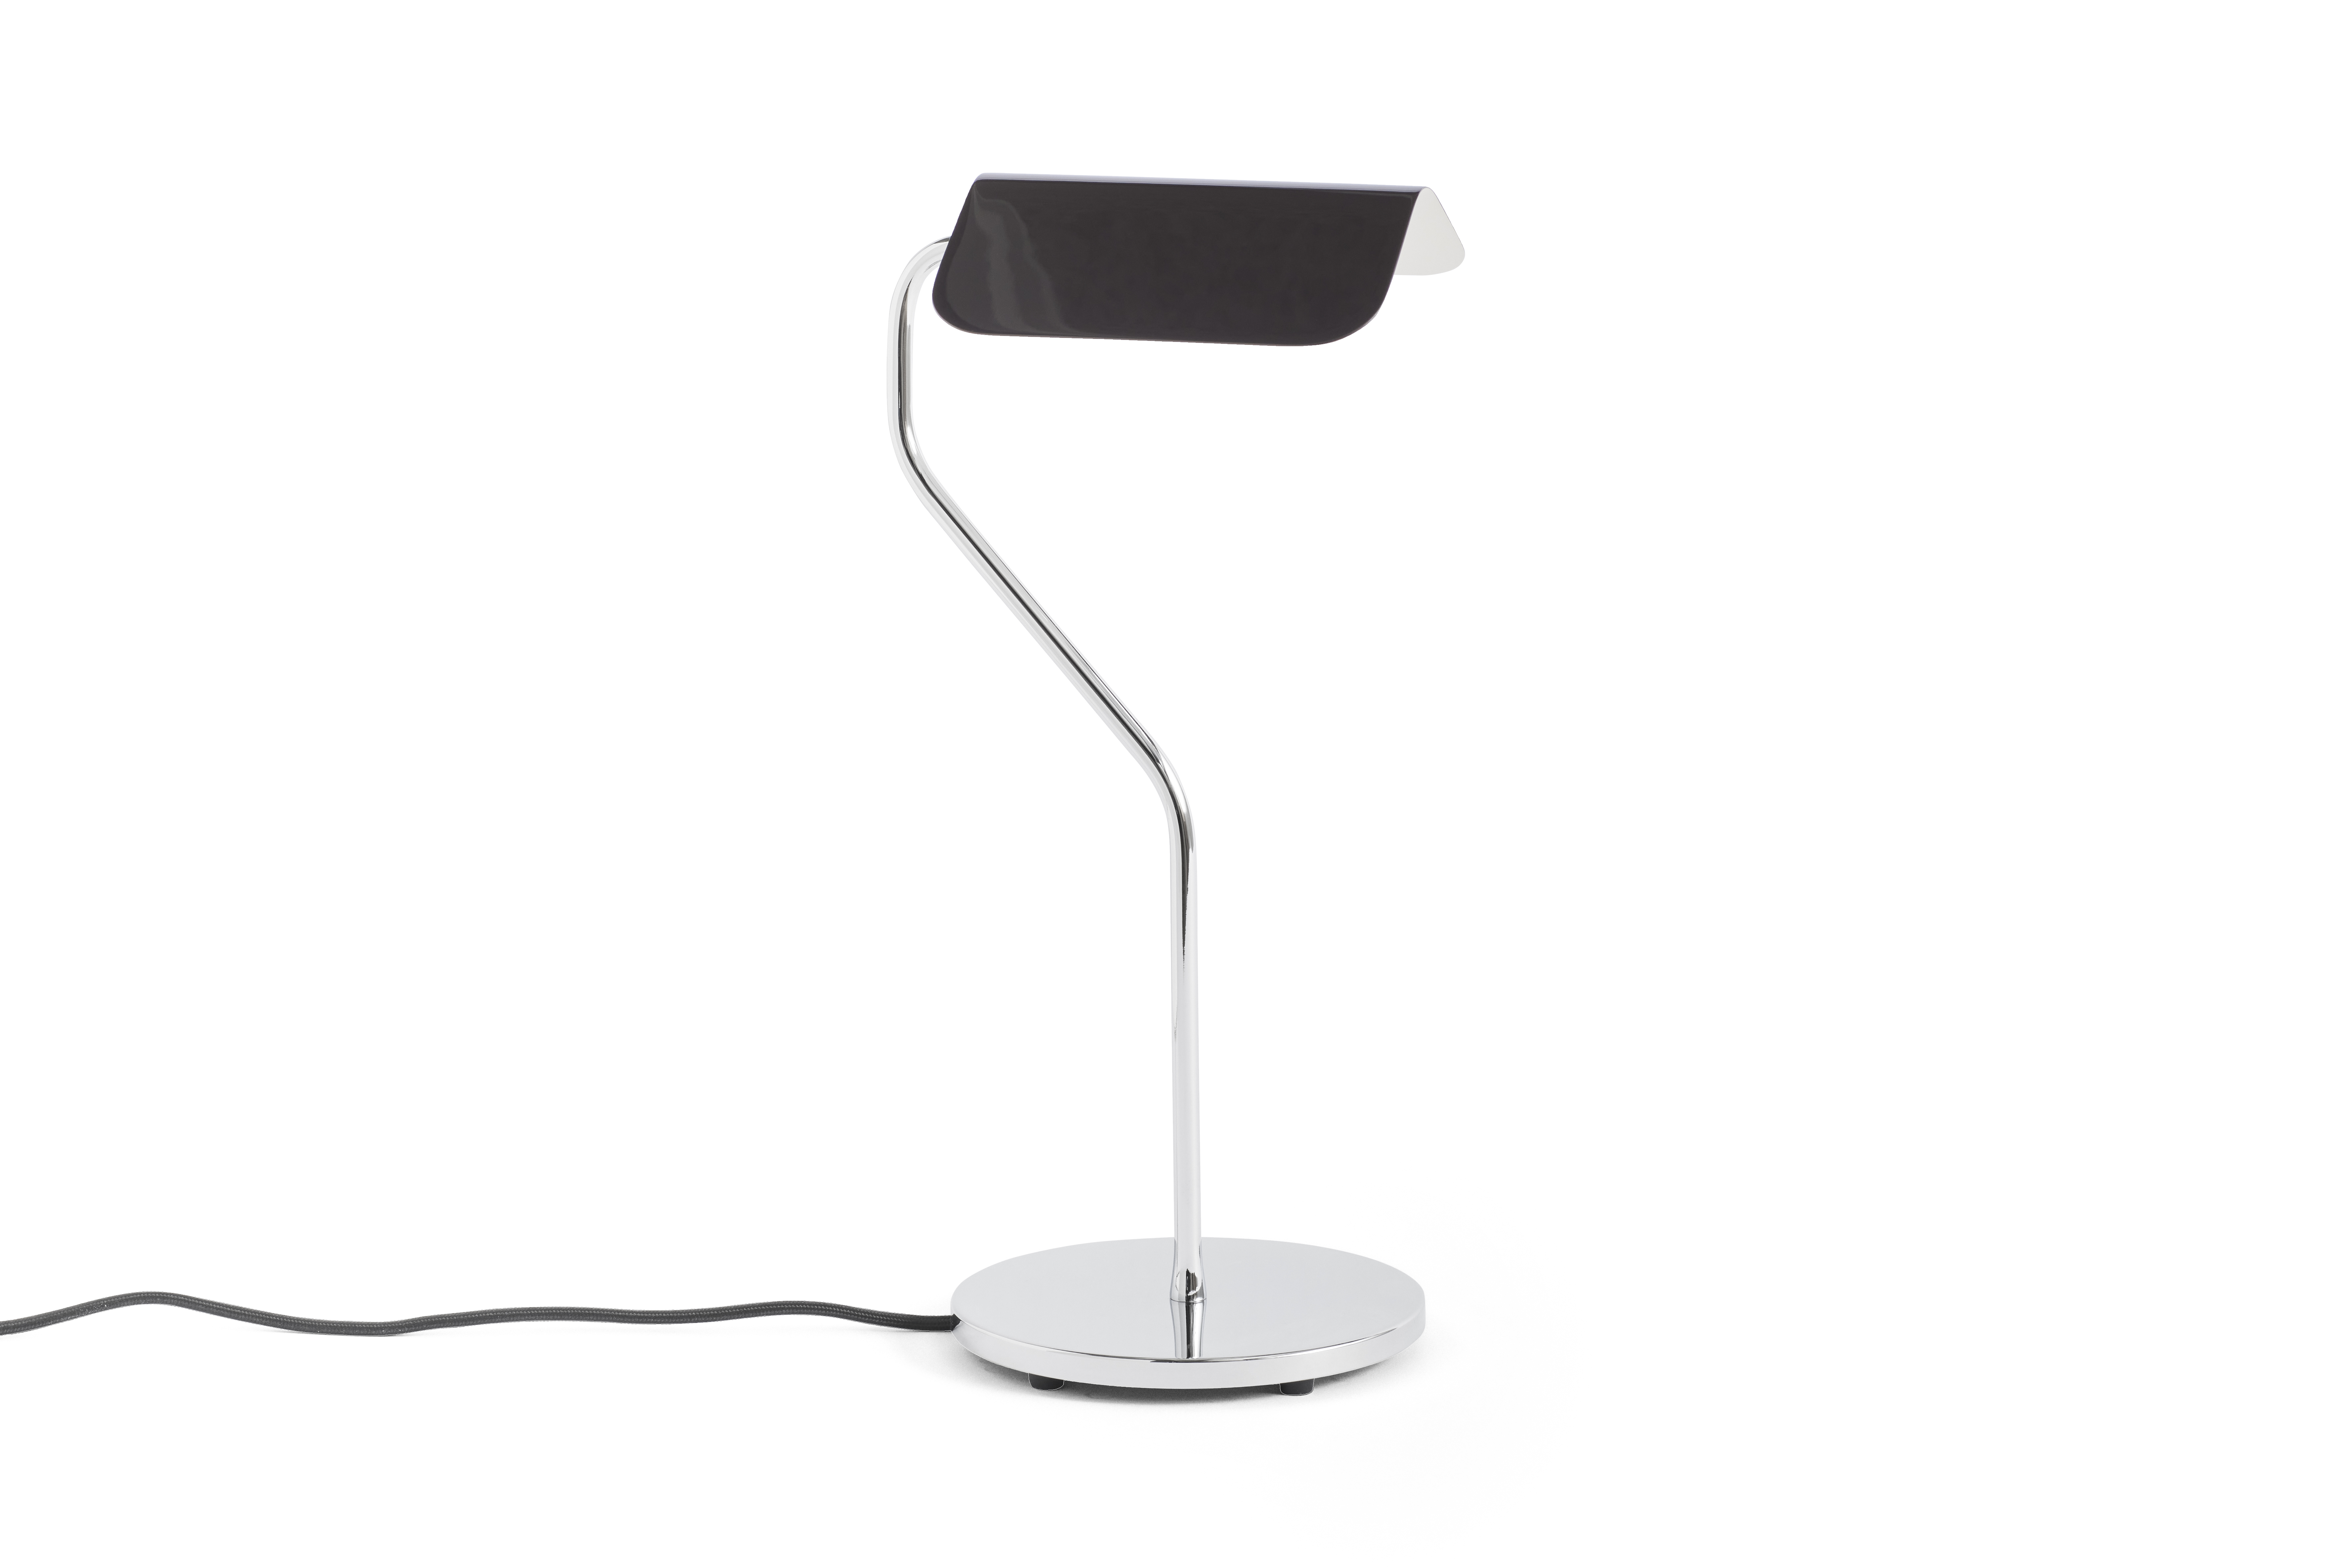 HAY Apex Table Lamp